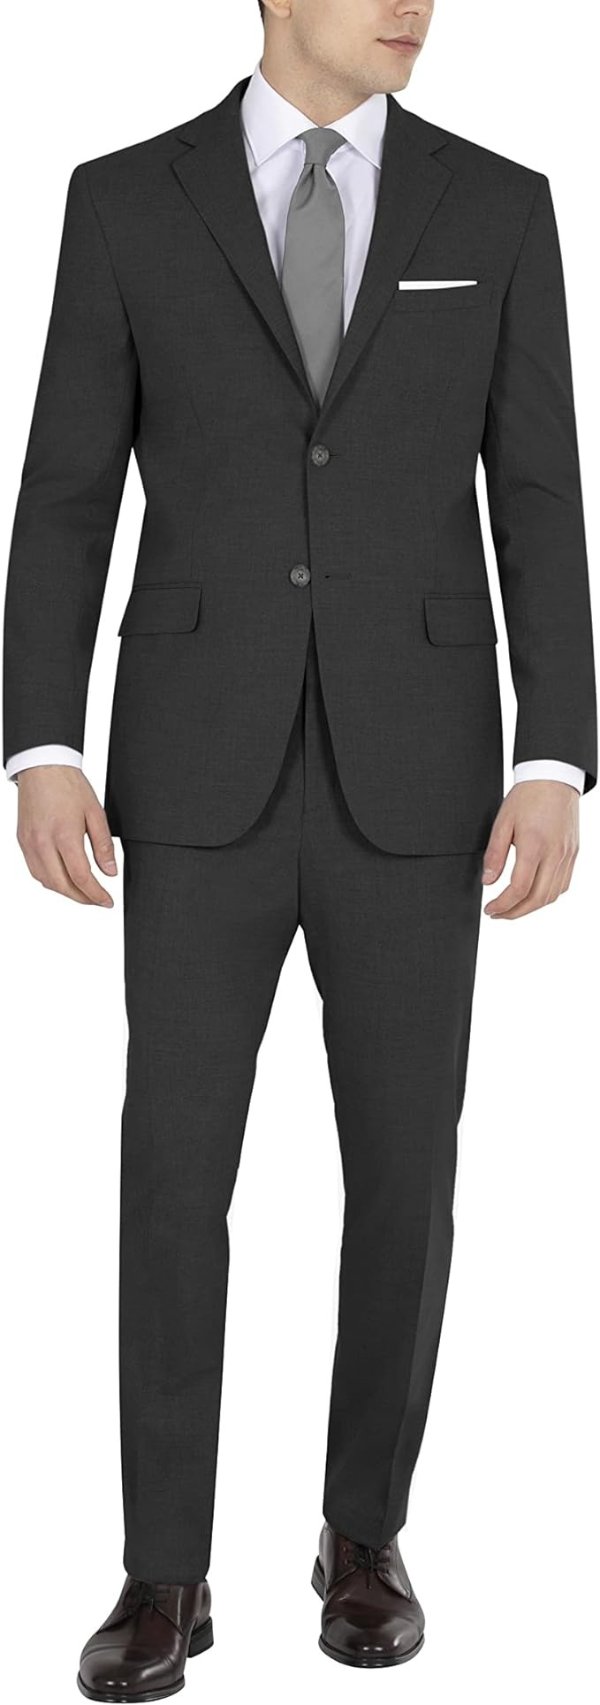 Men's Modern Fit High Performance Suit Separates